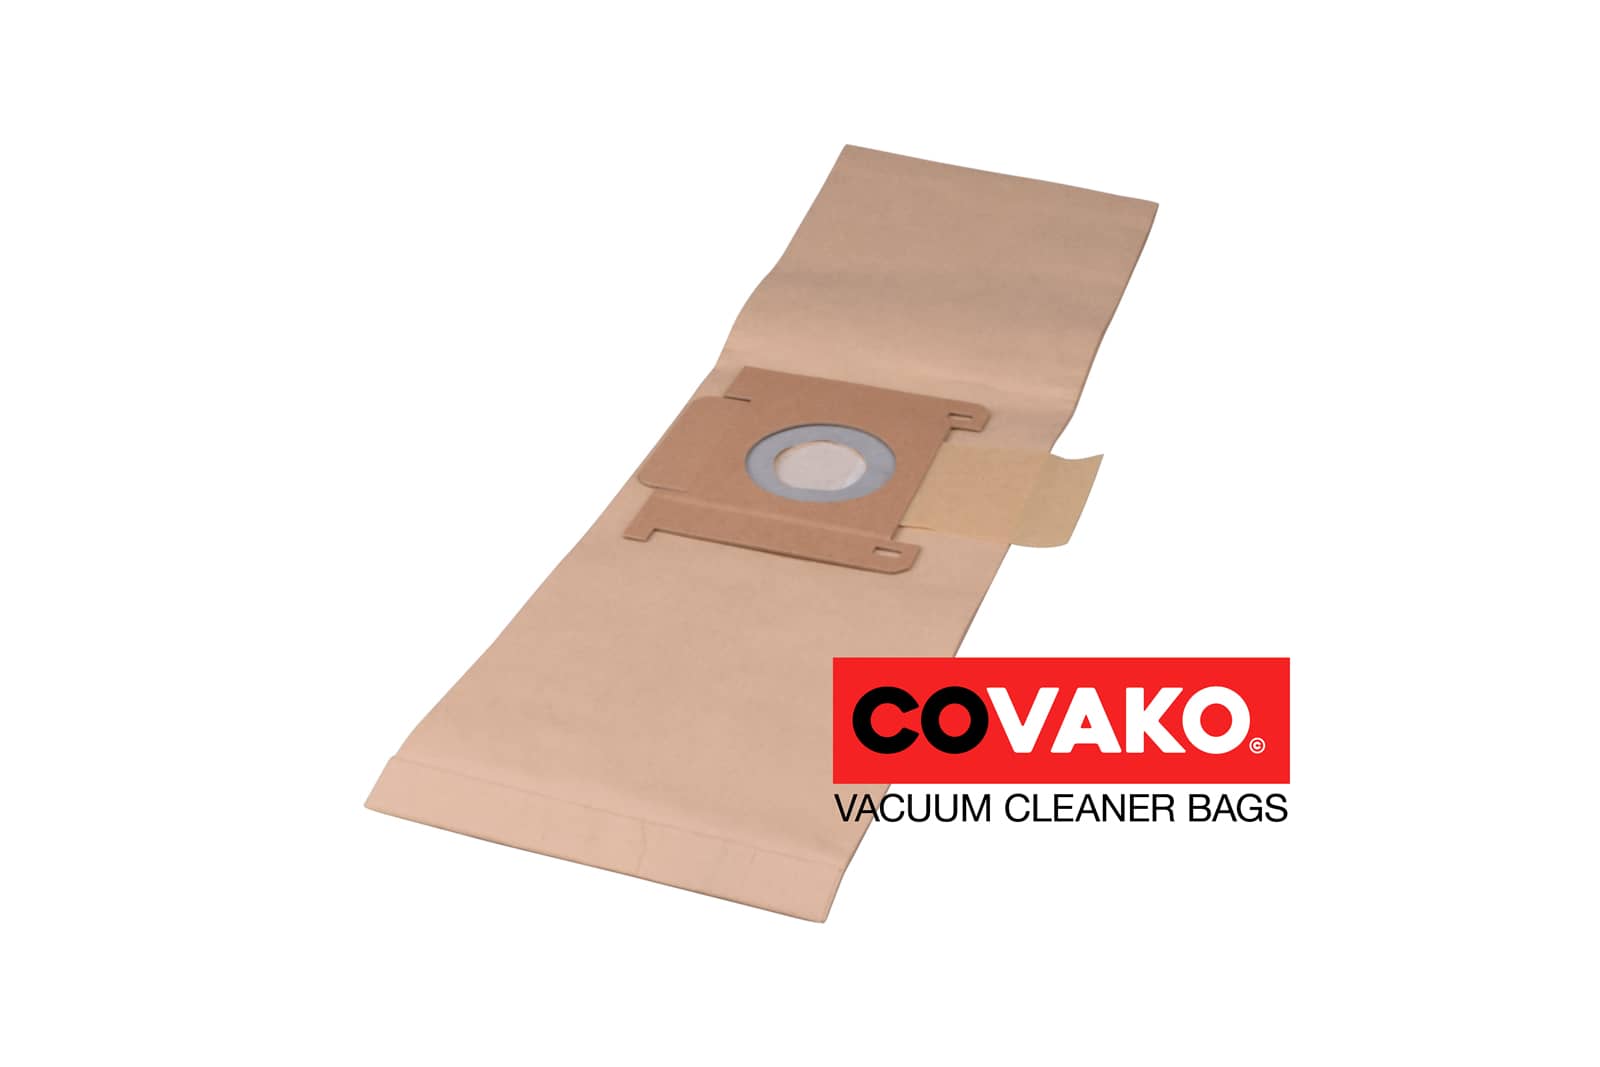 Fast C 06 / Paper - Fast vacuum cleaner bags